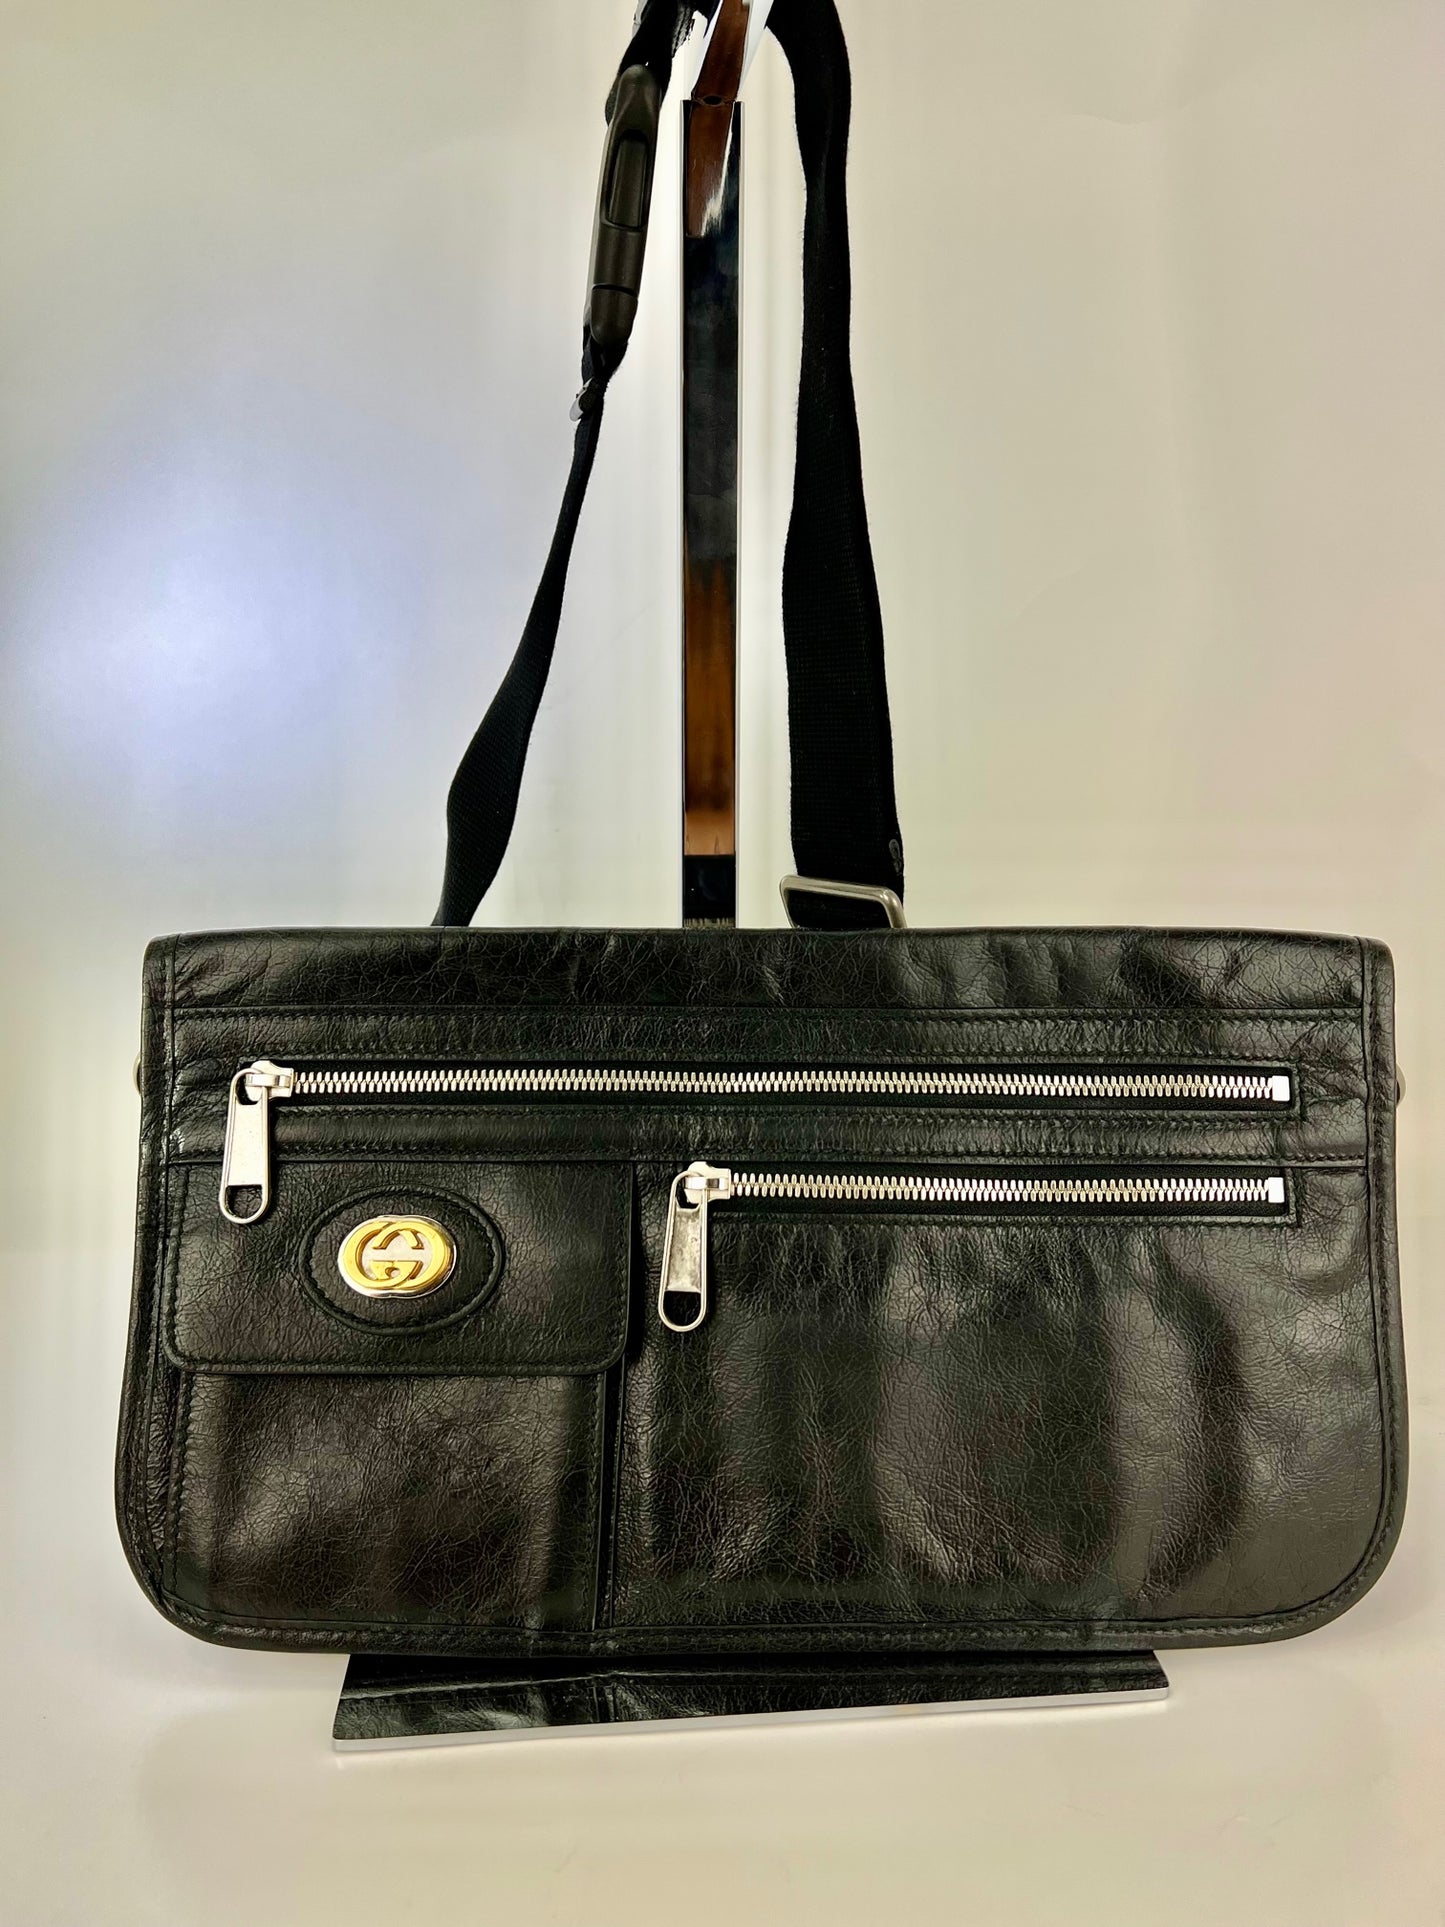 Messenger bag with Interlocking G